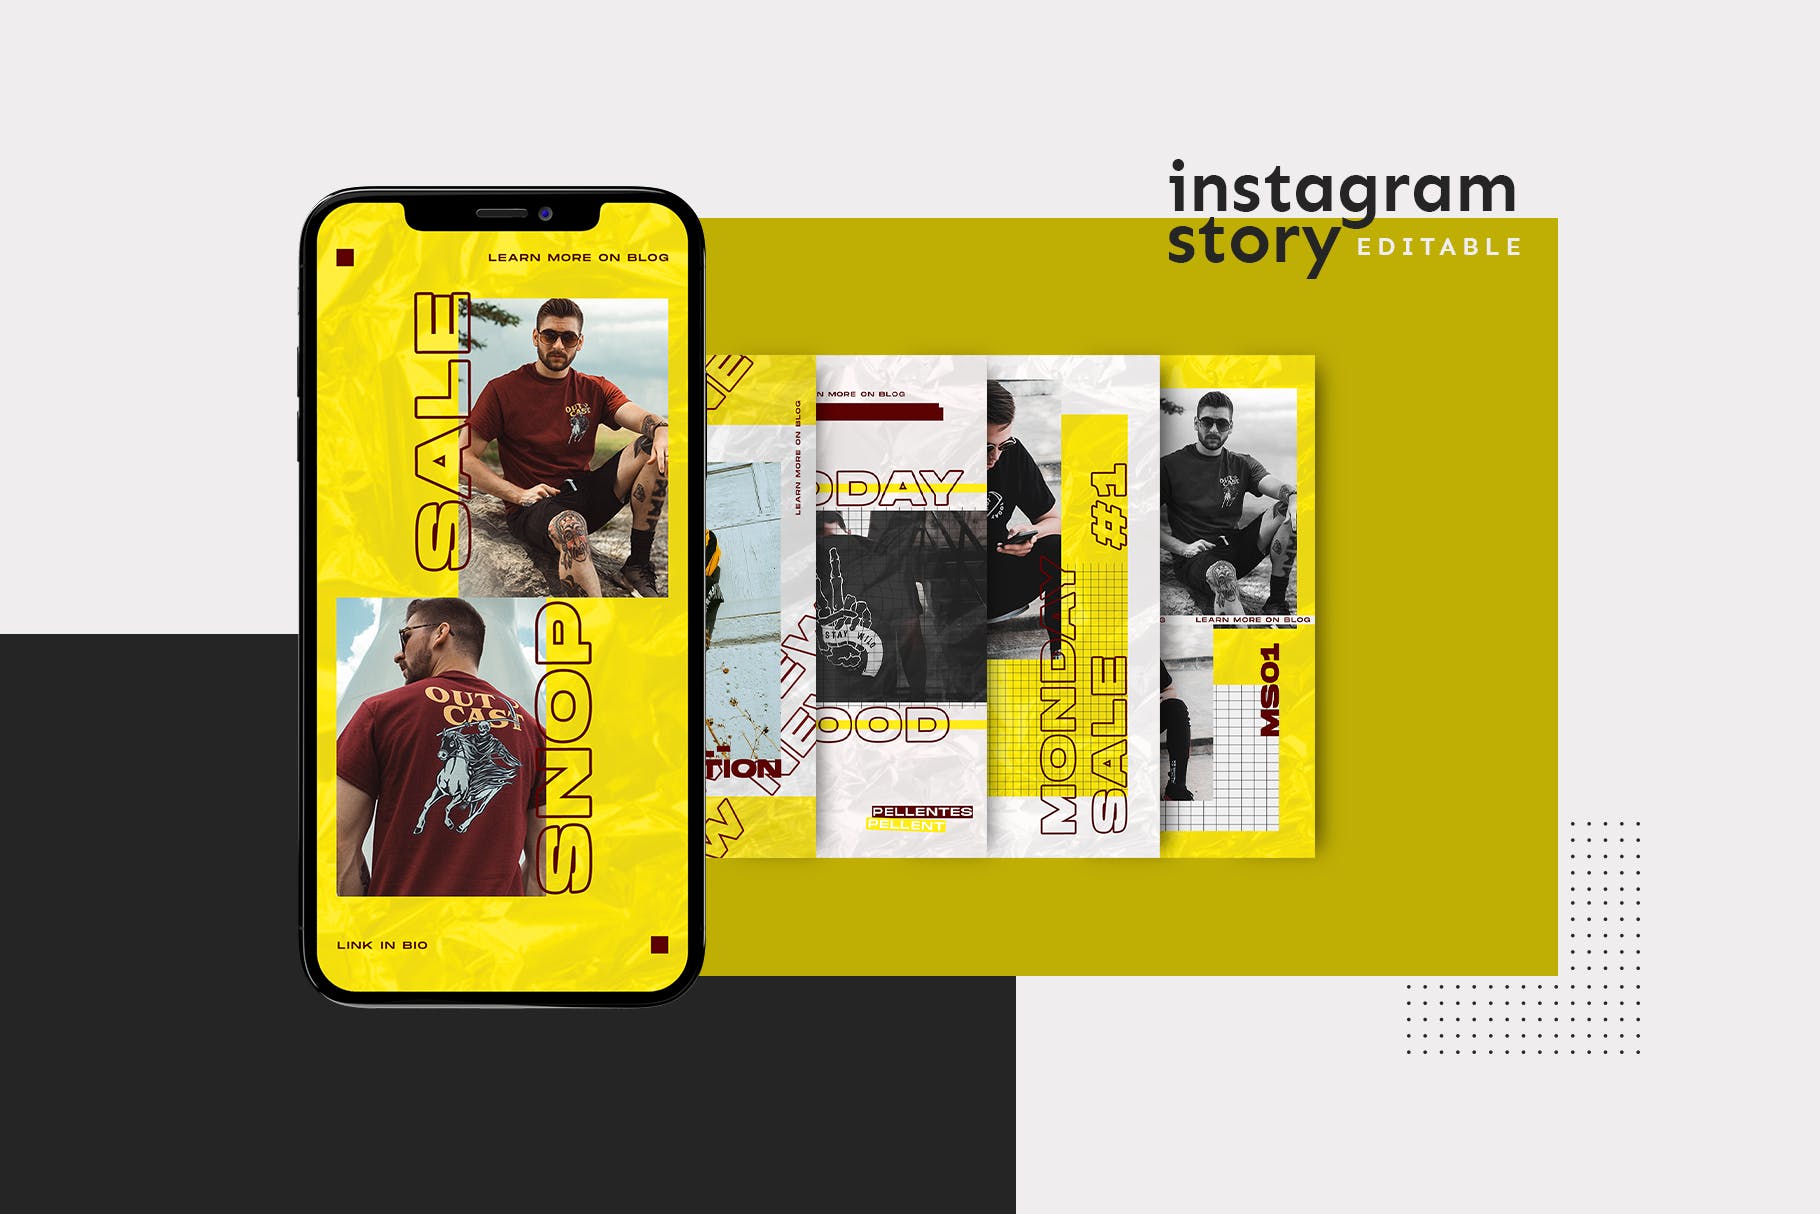 Instagram社交平台品牌故事广告设计模板蚂蚁素材精选 Instagram Story Template插图(1)